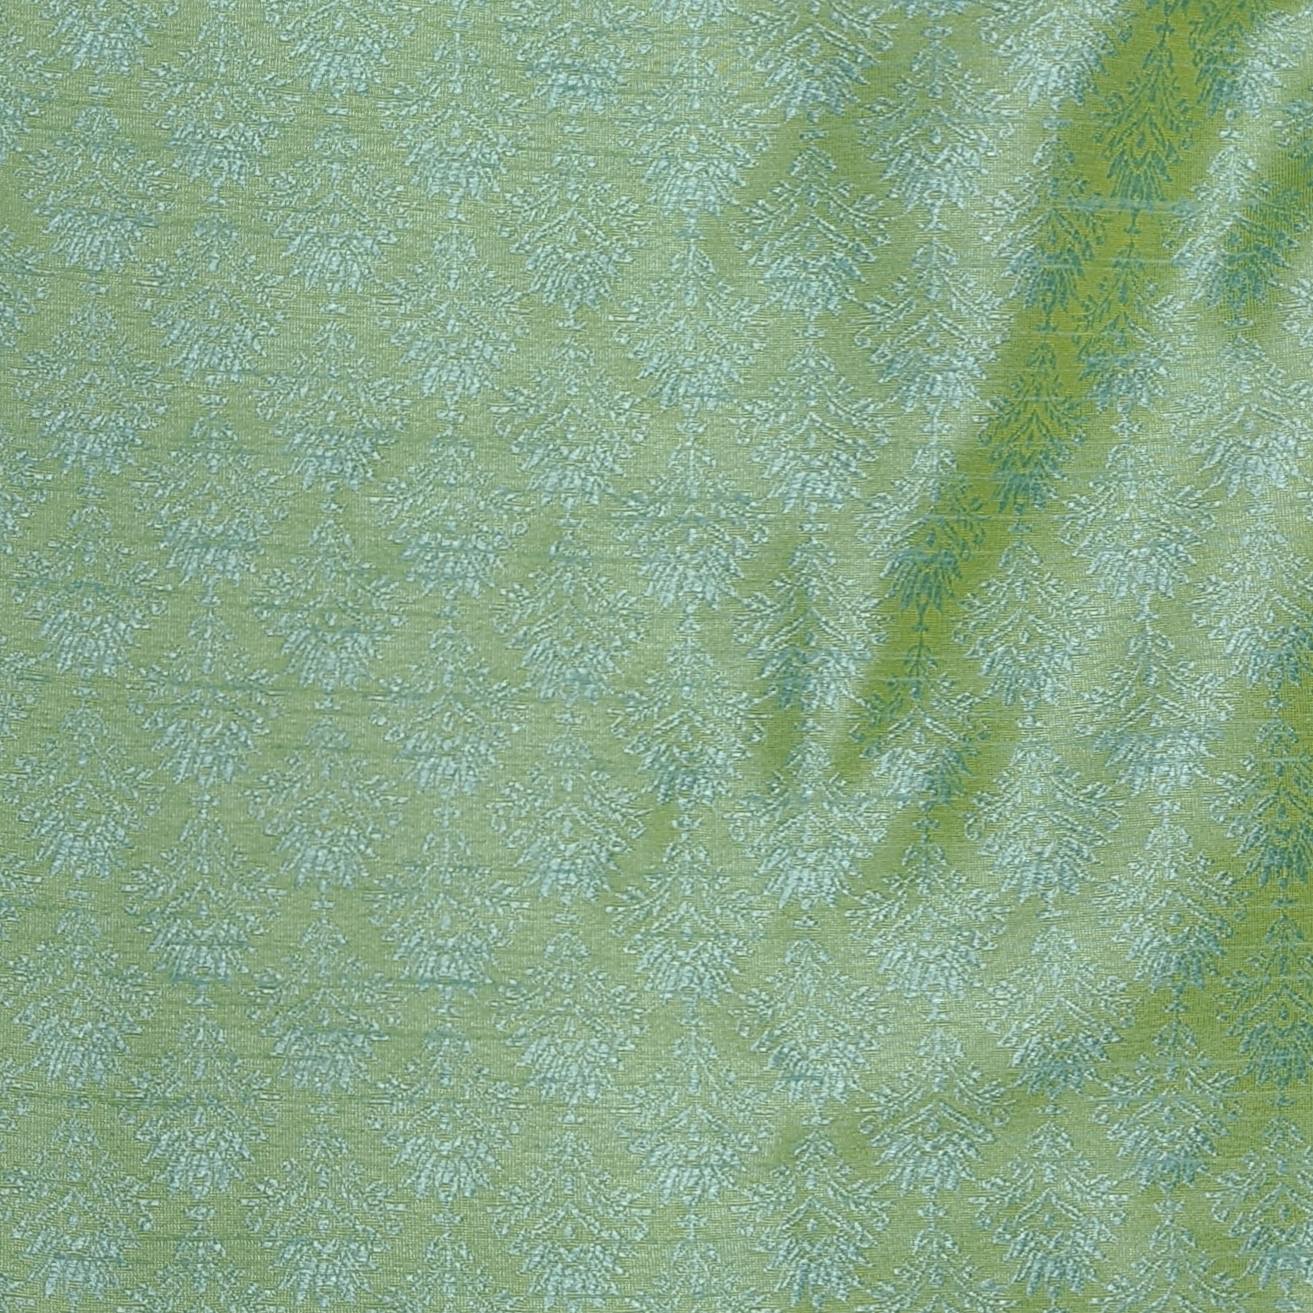 Mantire Men's Premium Raw Silk jackqurad Kurta Pyjama Fabric (Green)